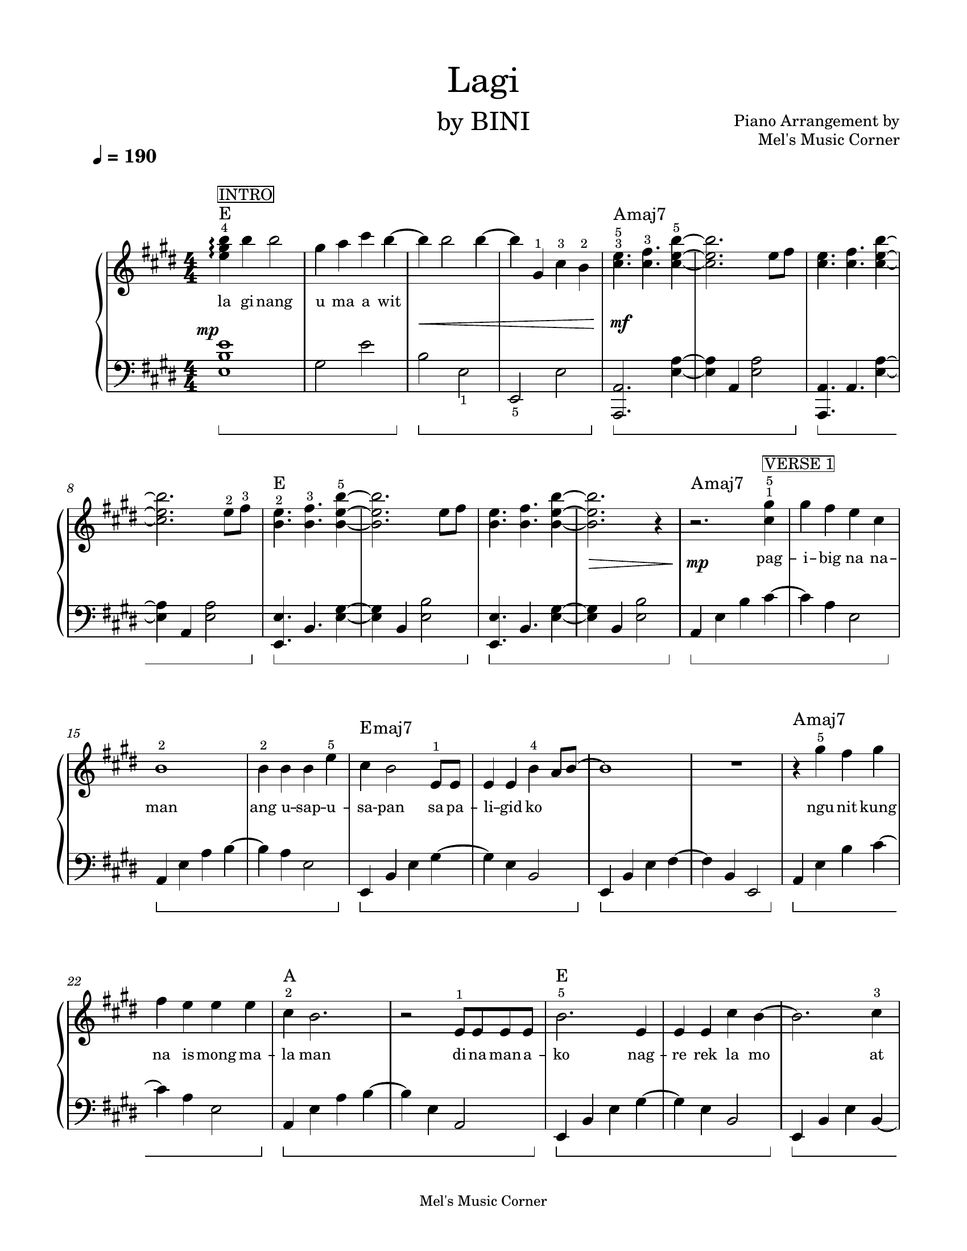 BINI - Lagi (piano sheet music) by Mel's Music Corner